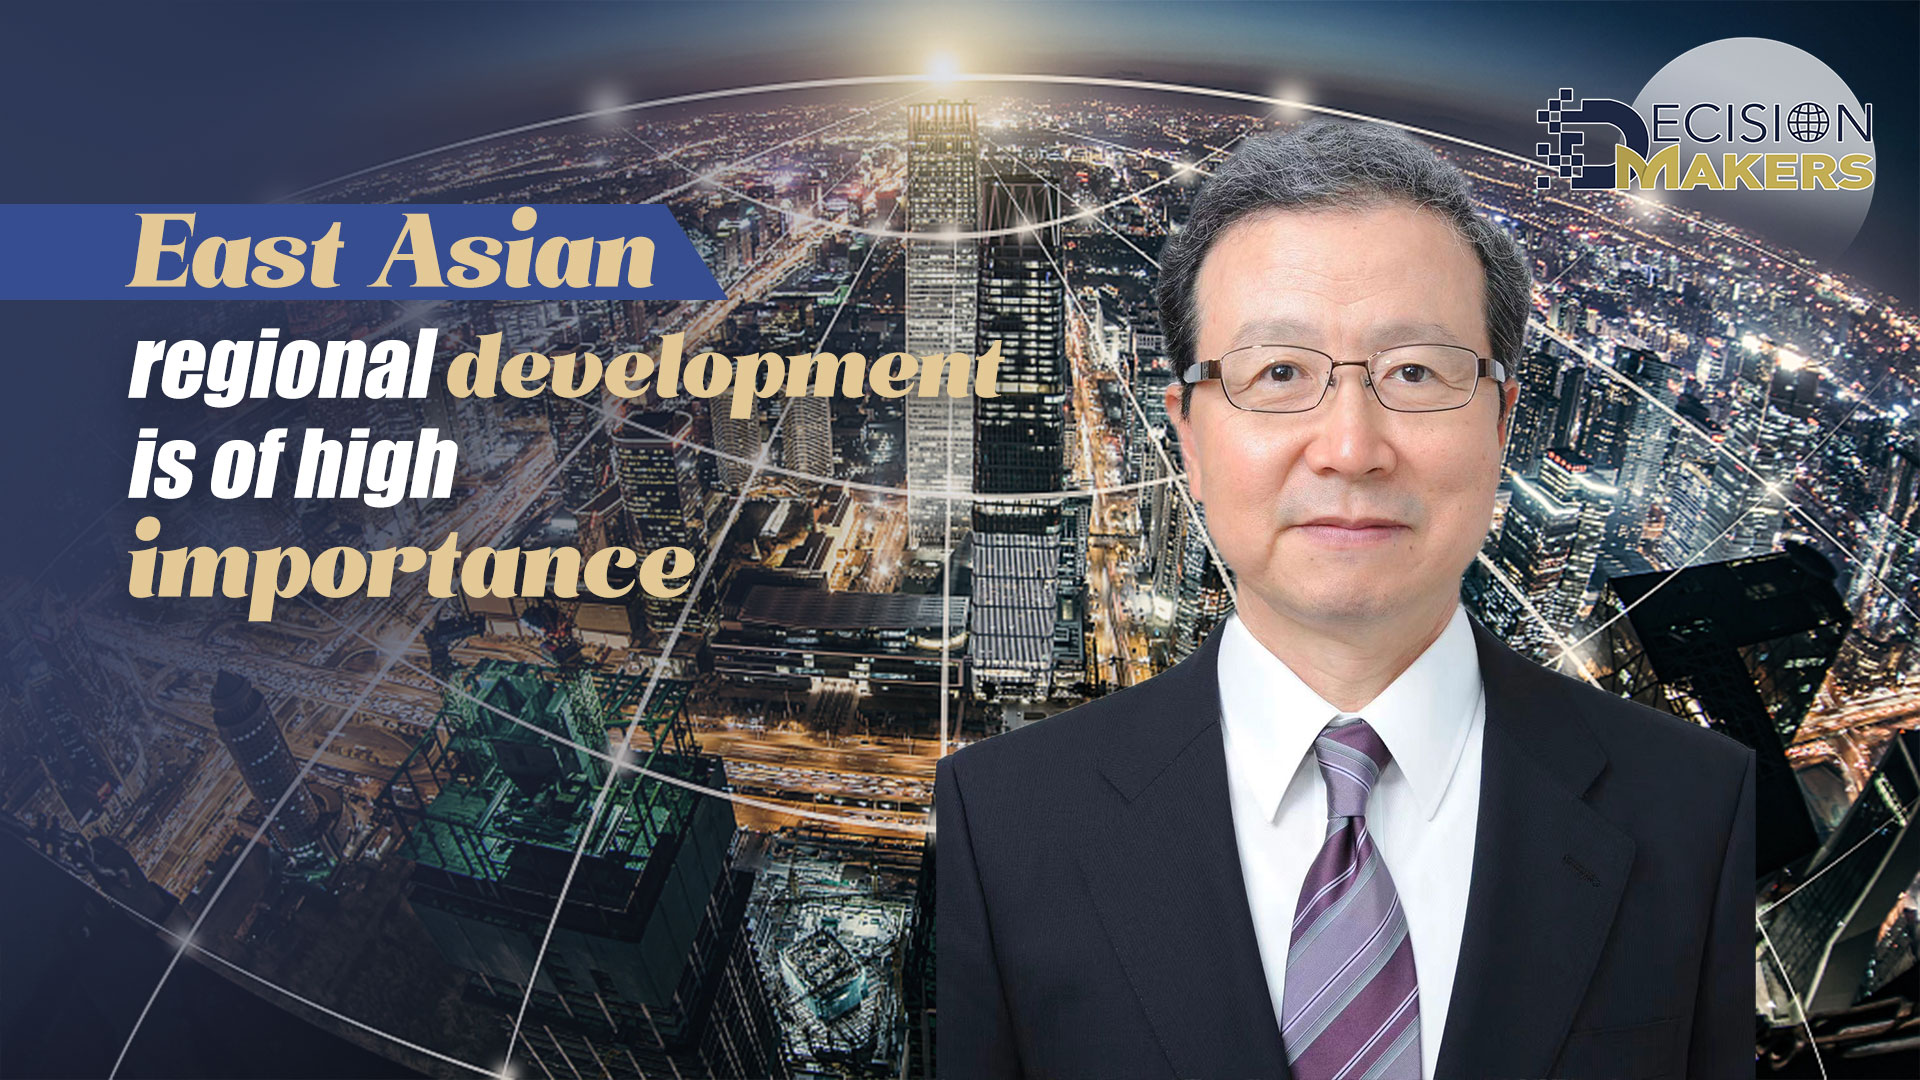 East Asian regional development is of high importance